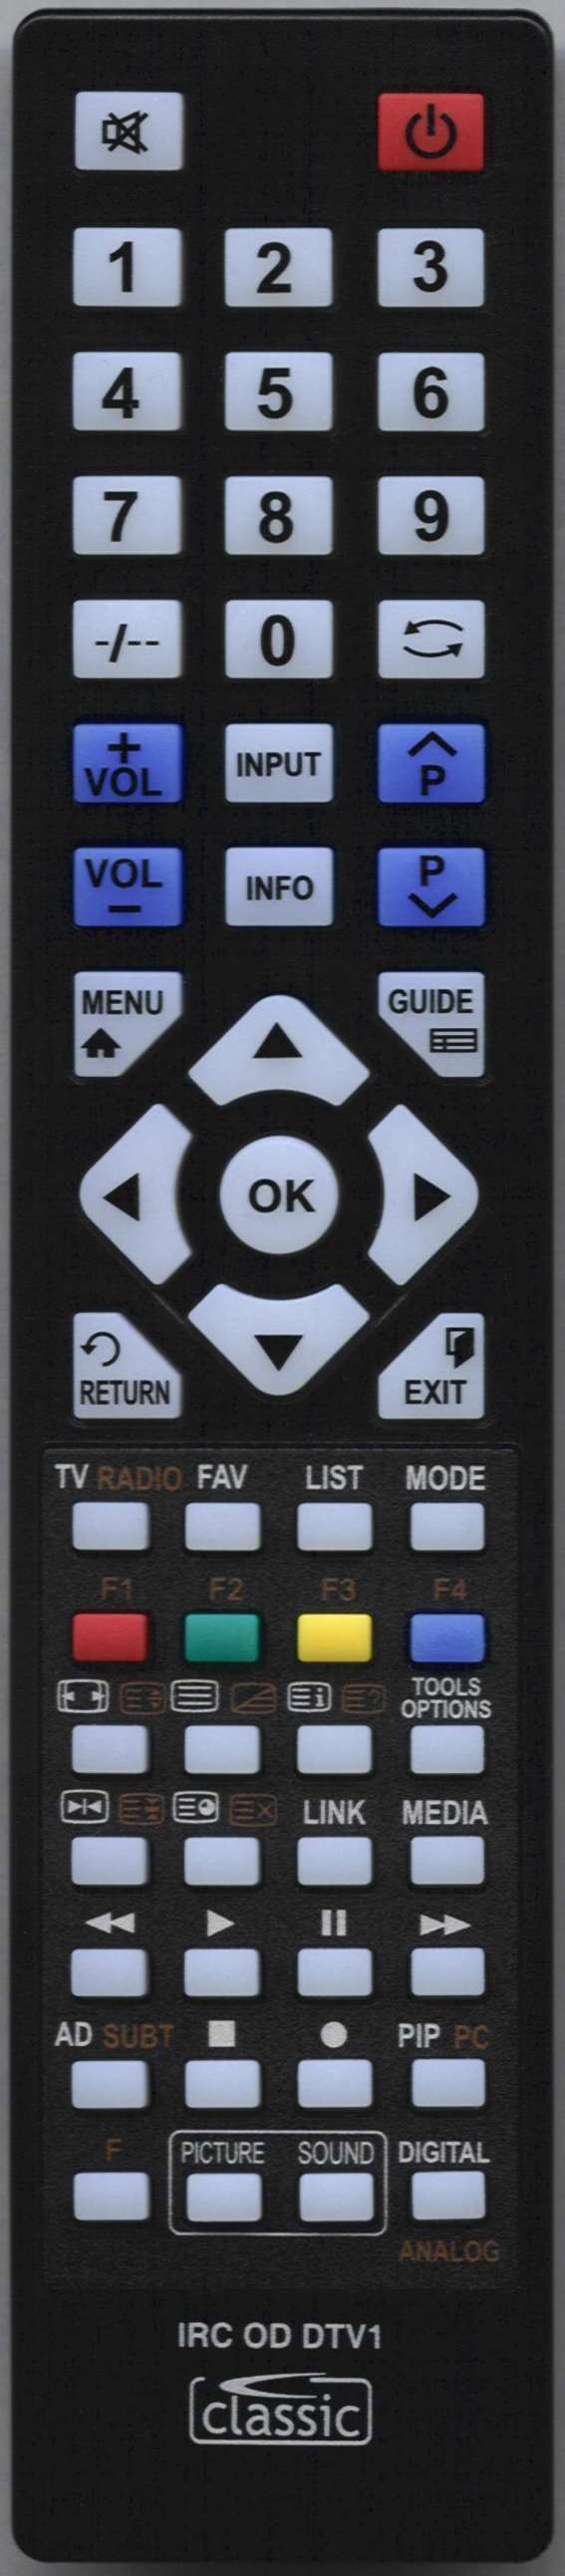 TECHNIKA 24F22B-FHD/DVD Remote Control Alternative